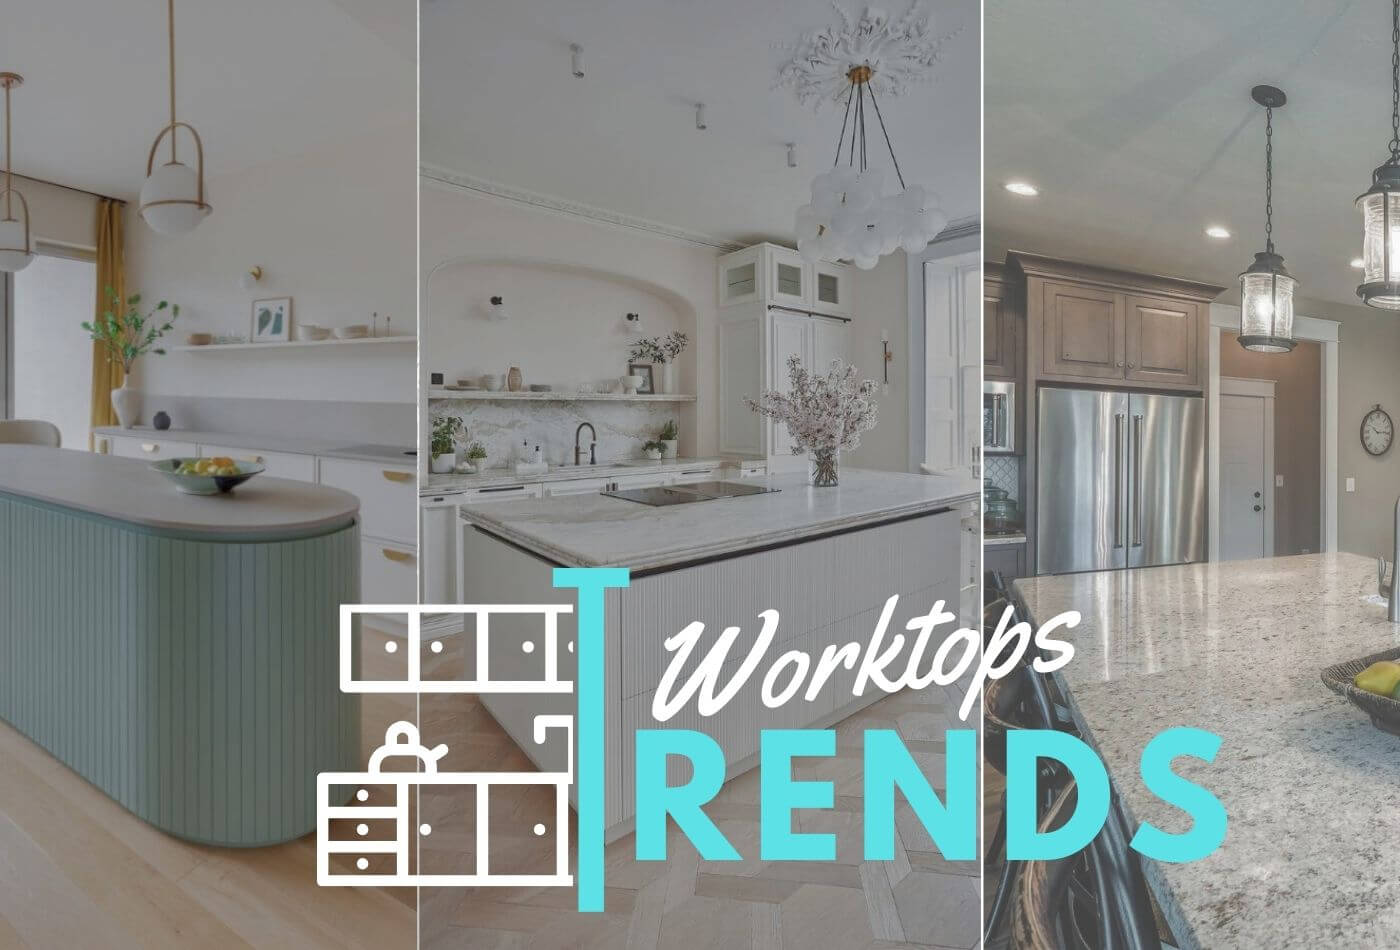 Top Kitchen Worktop Trends: Materials, Styles, And Tips